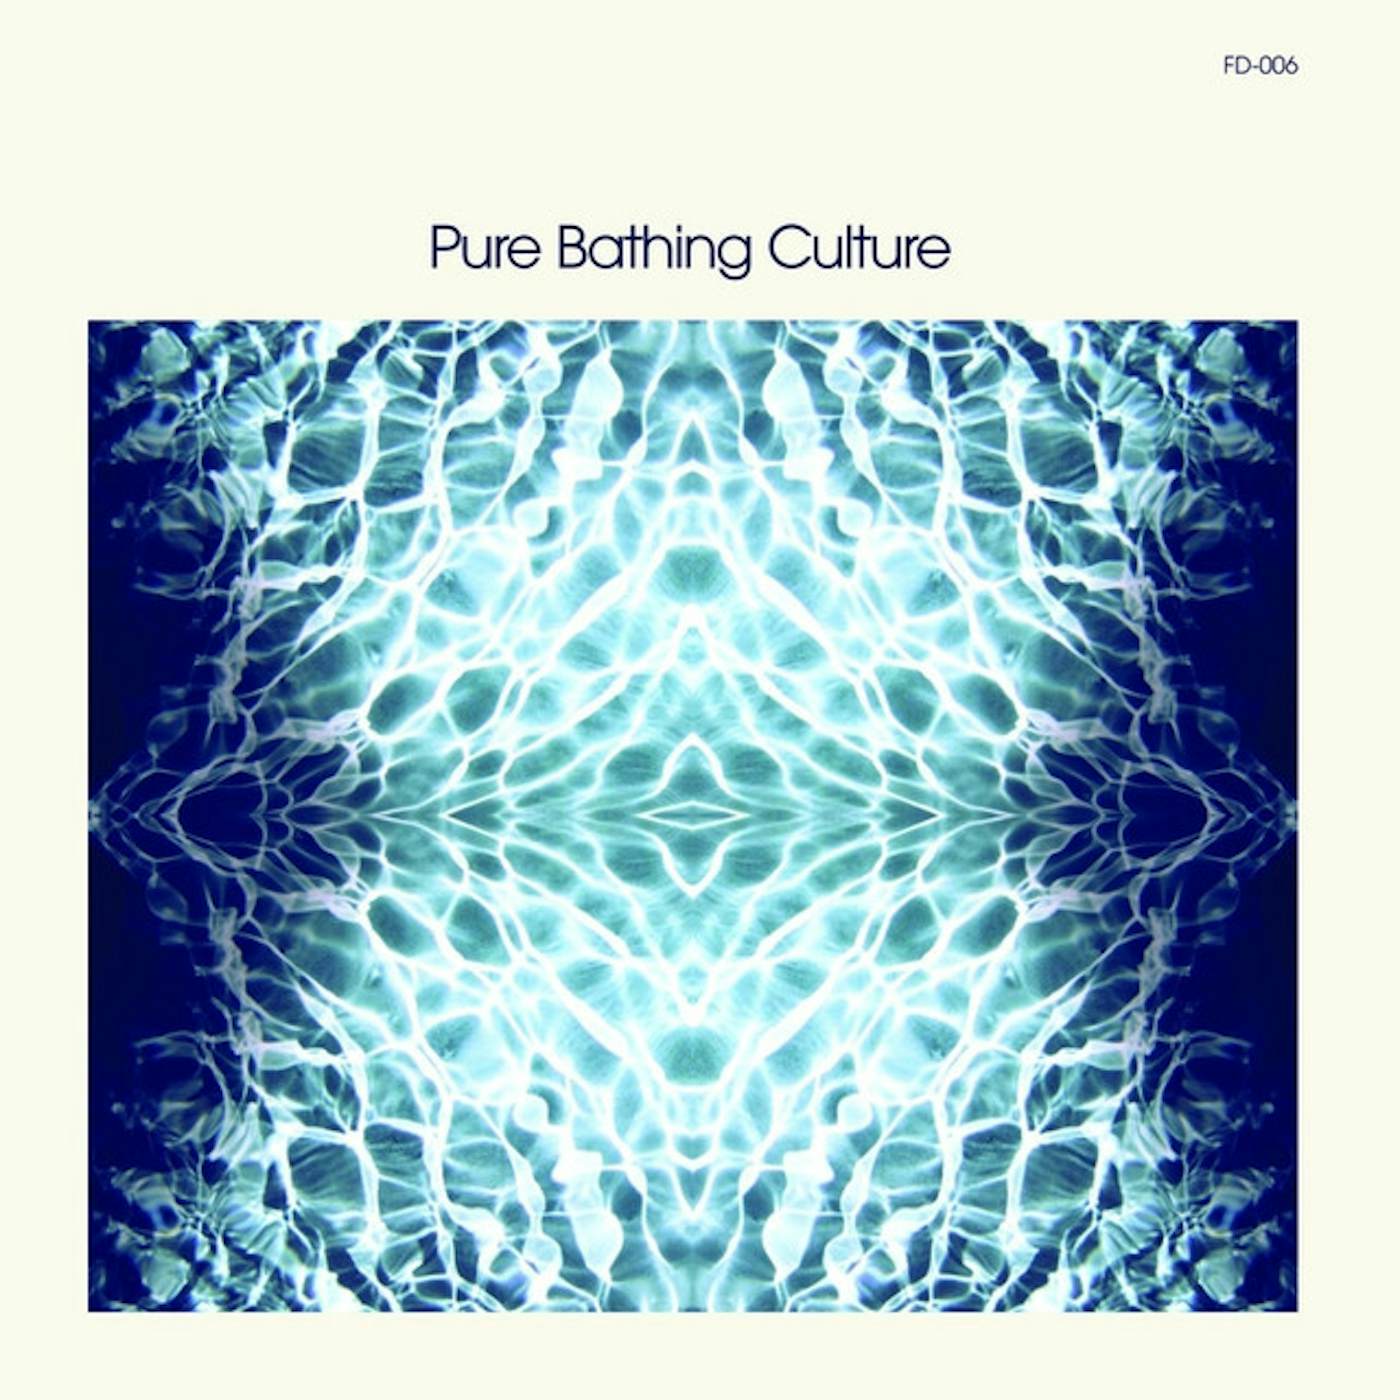 Pure Bathing Culture Vinyl Record